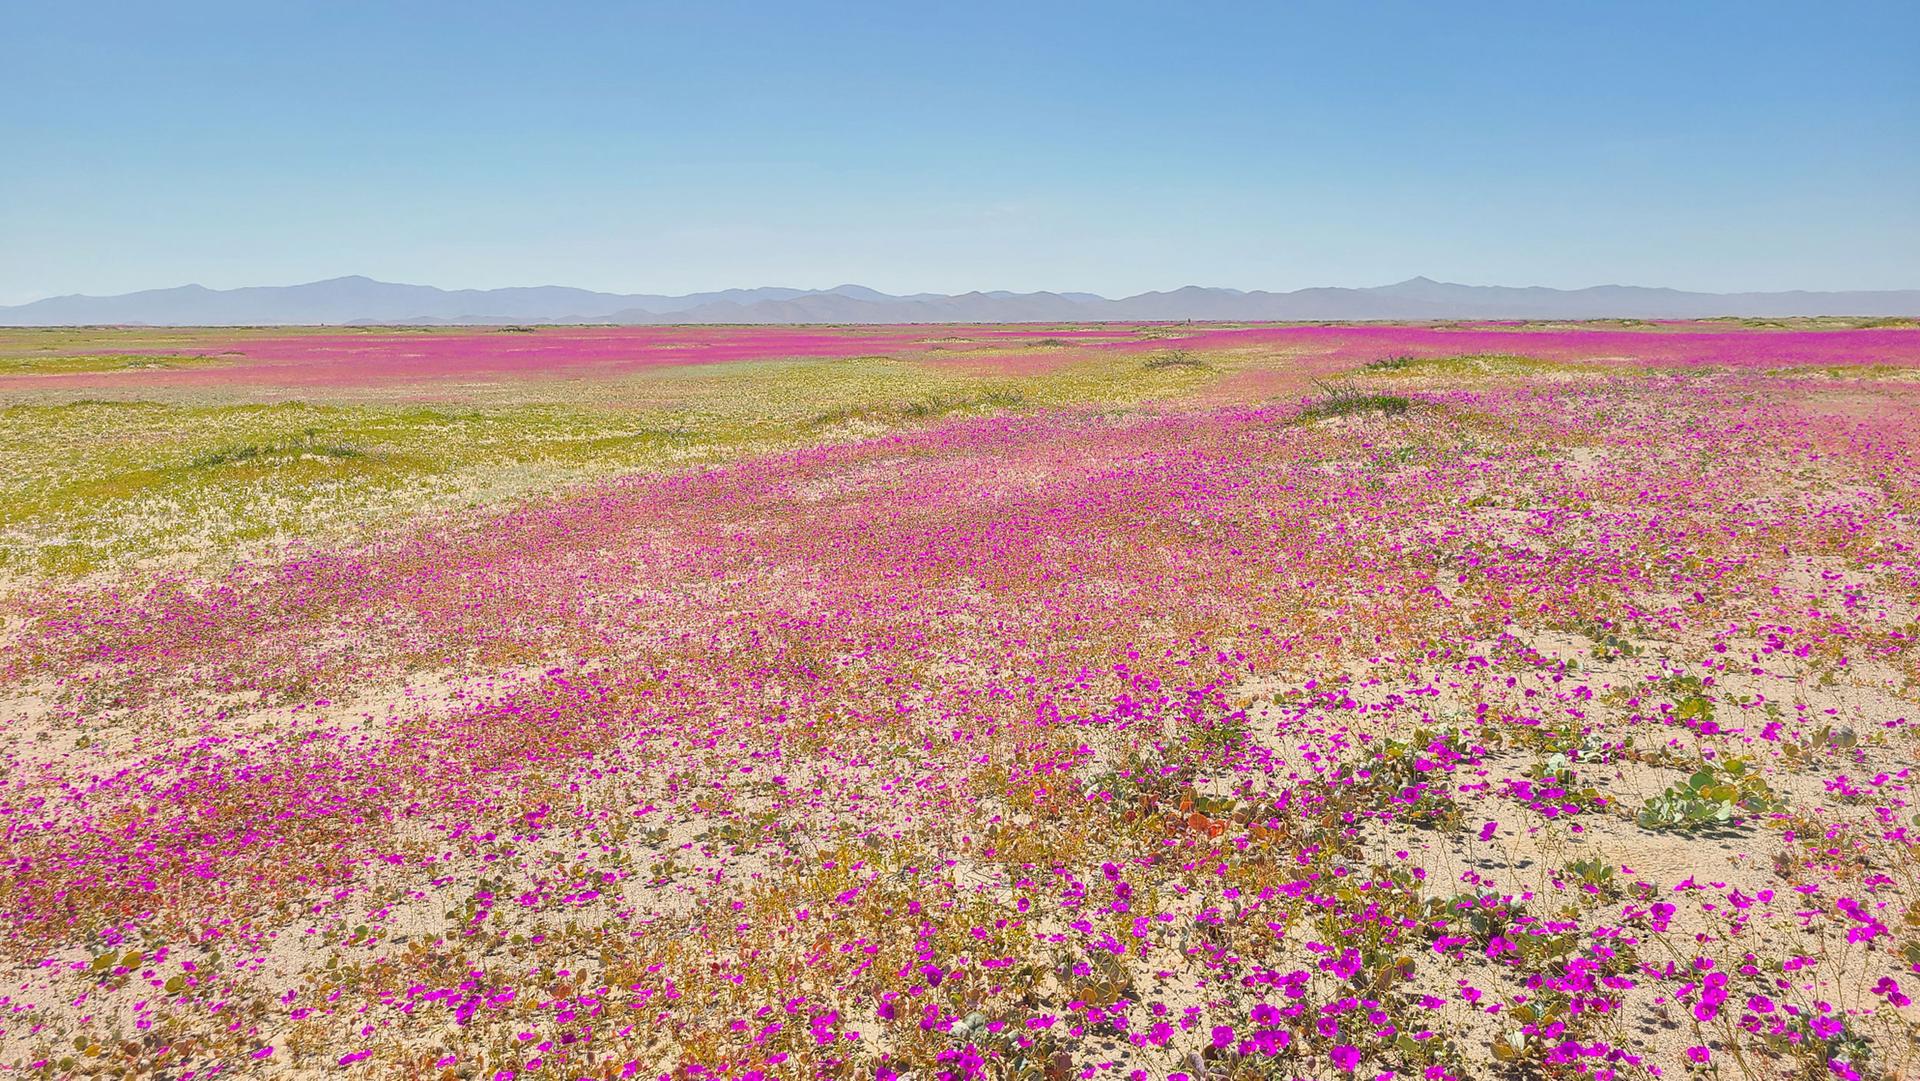 Fields of pata de guanaco flowers bloom across the Atacama Desert in northern Chile.